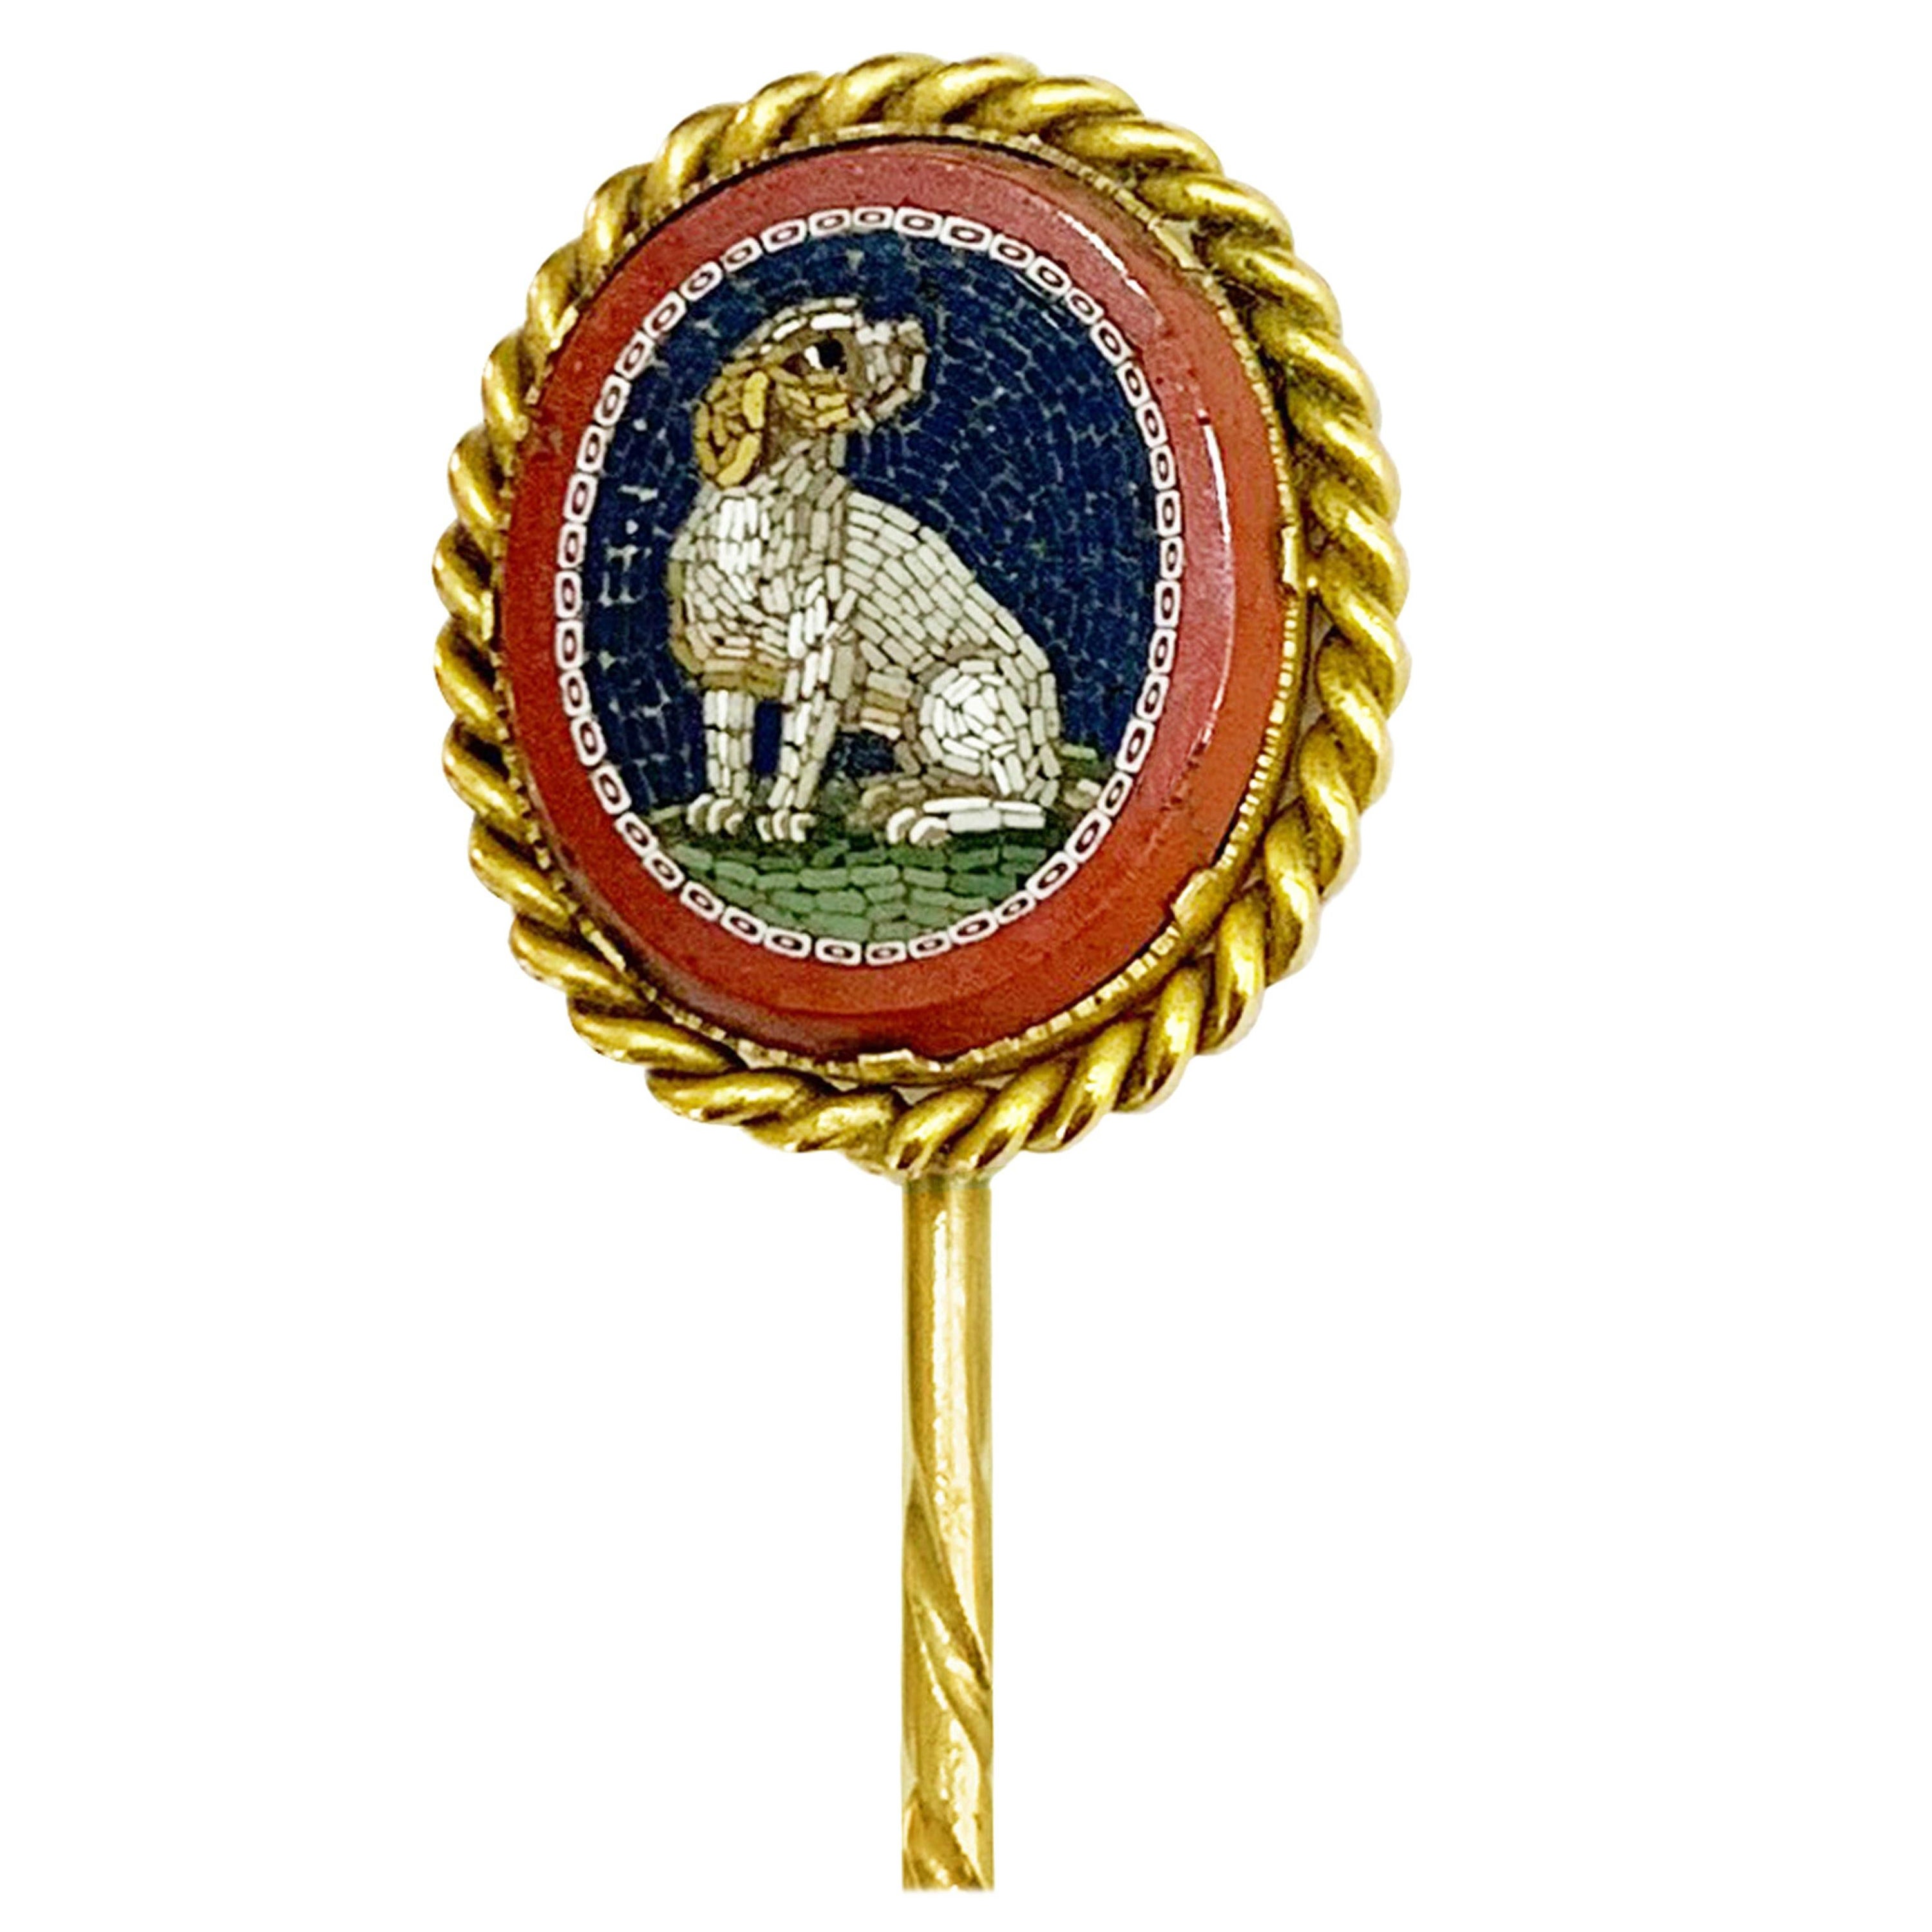 18 Karat Gold Micromosaic Stick Pin Depicting a Little Dog, Garrard & Co, London